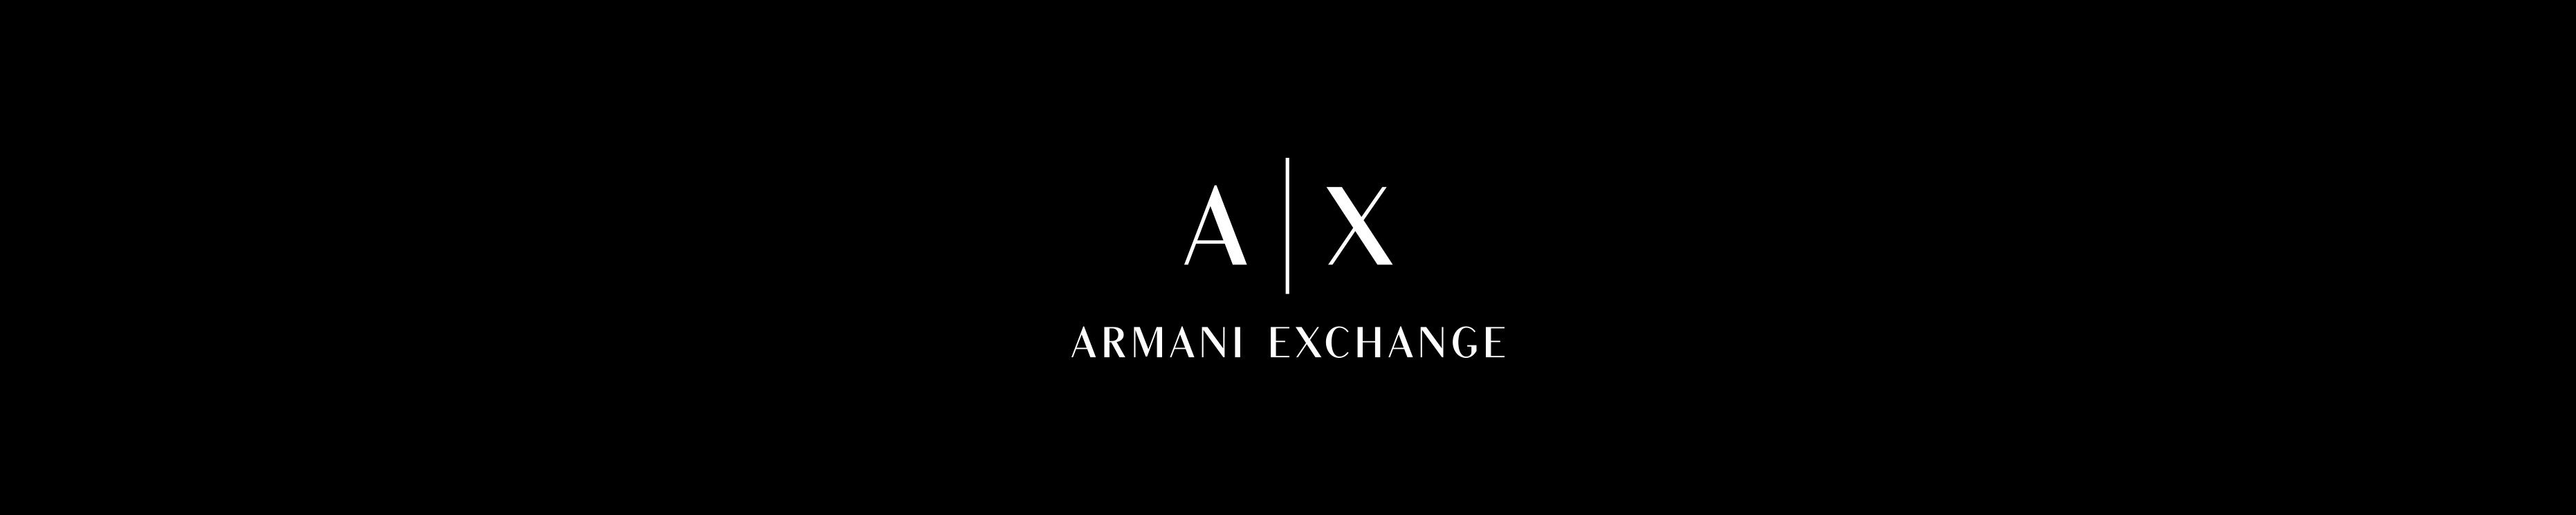 Armani Exchange Wallpaper Free Armani Exchange Background